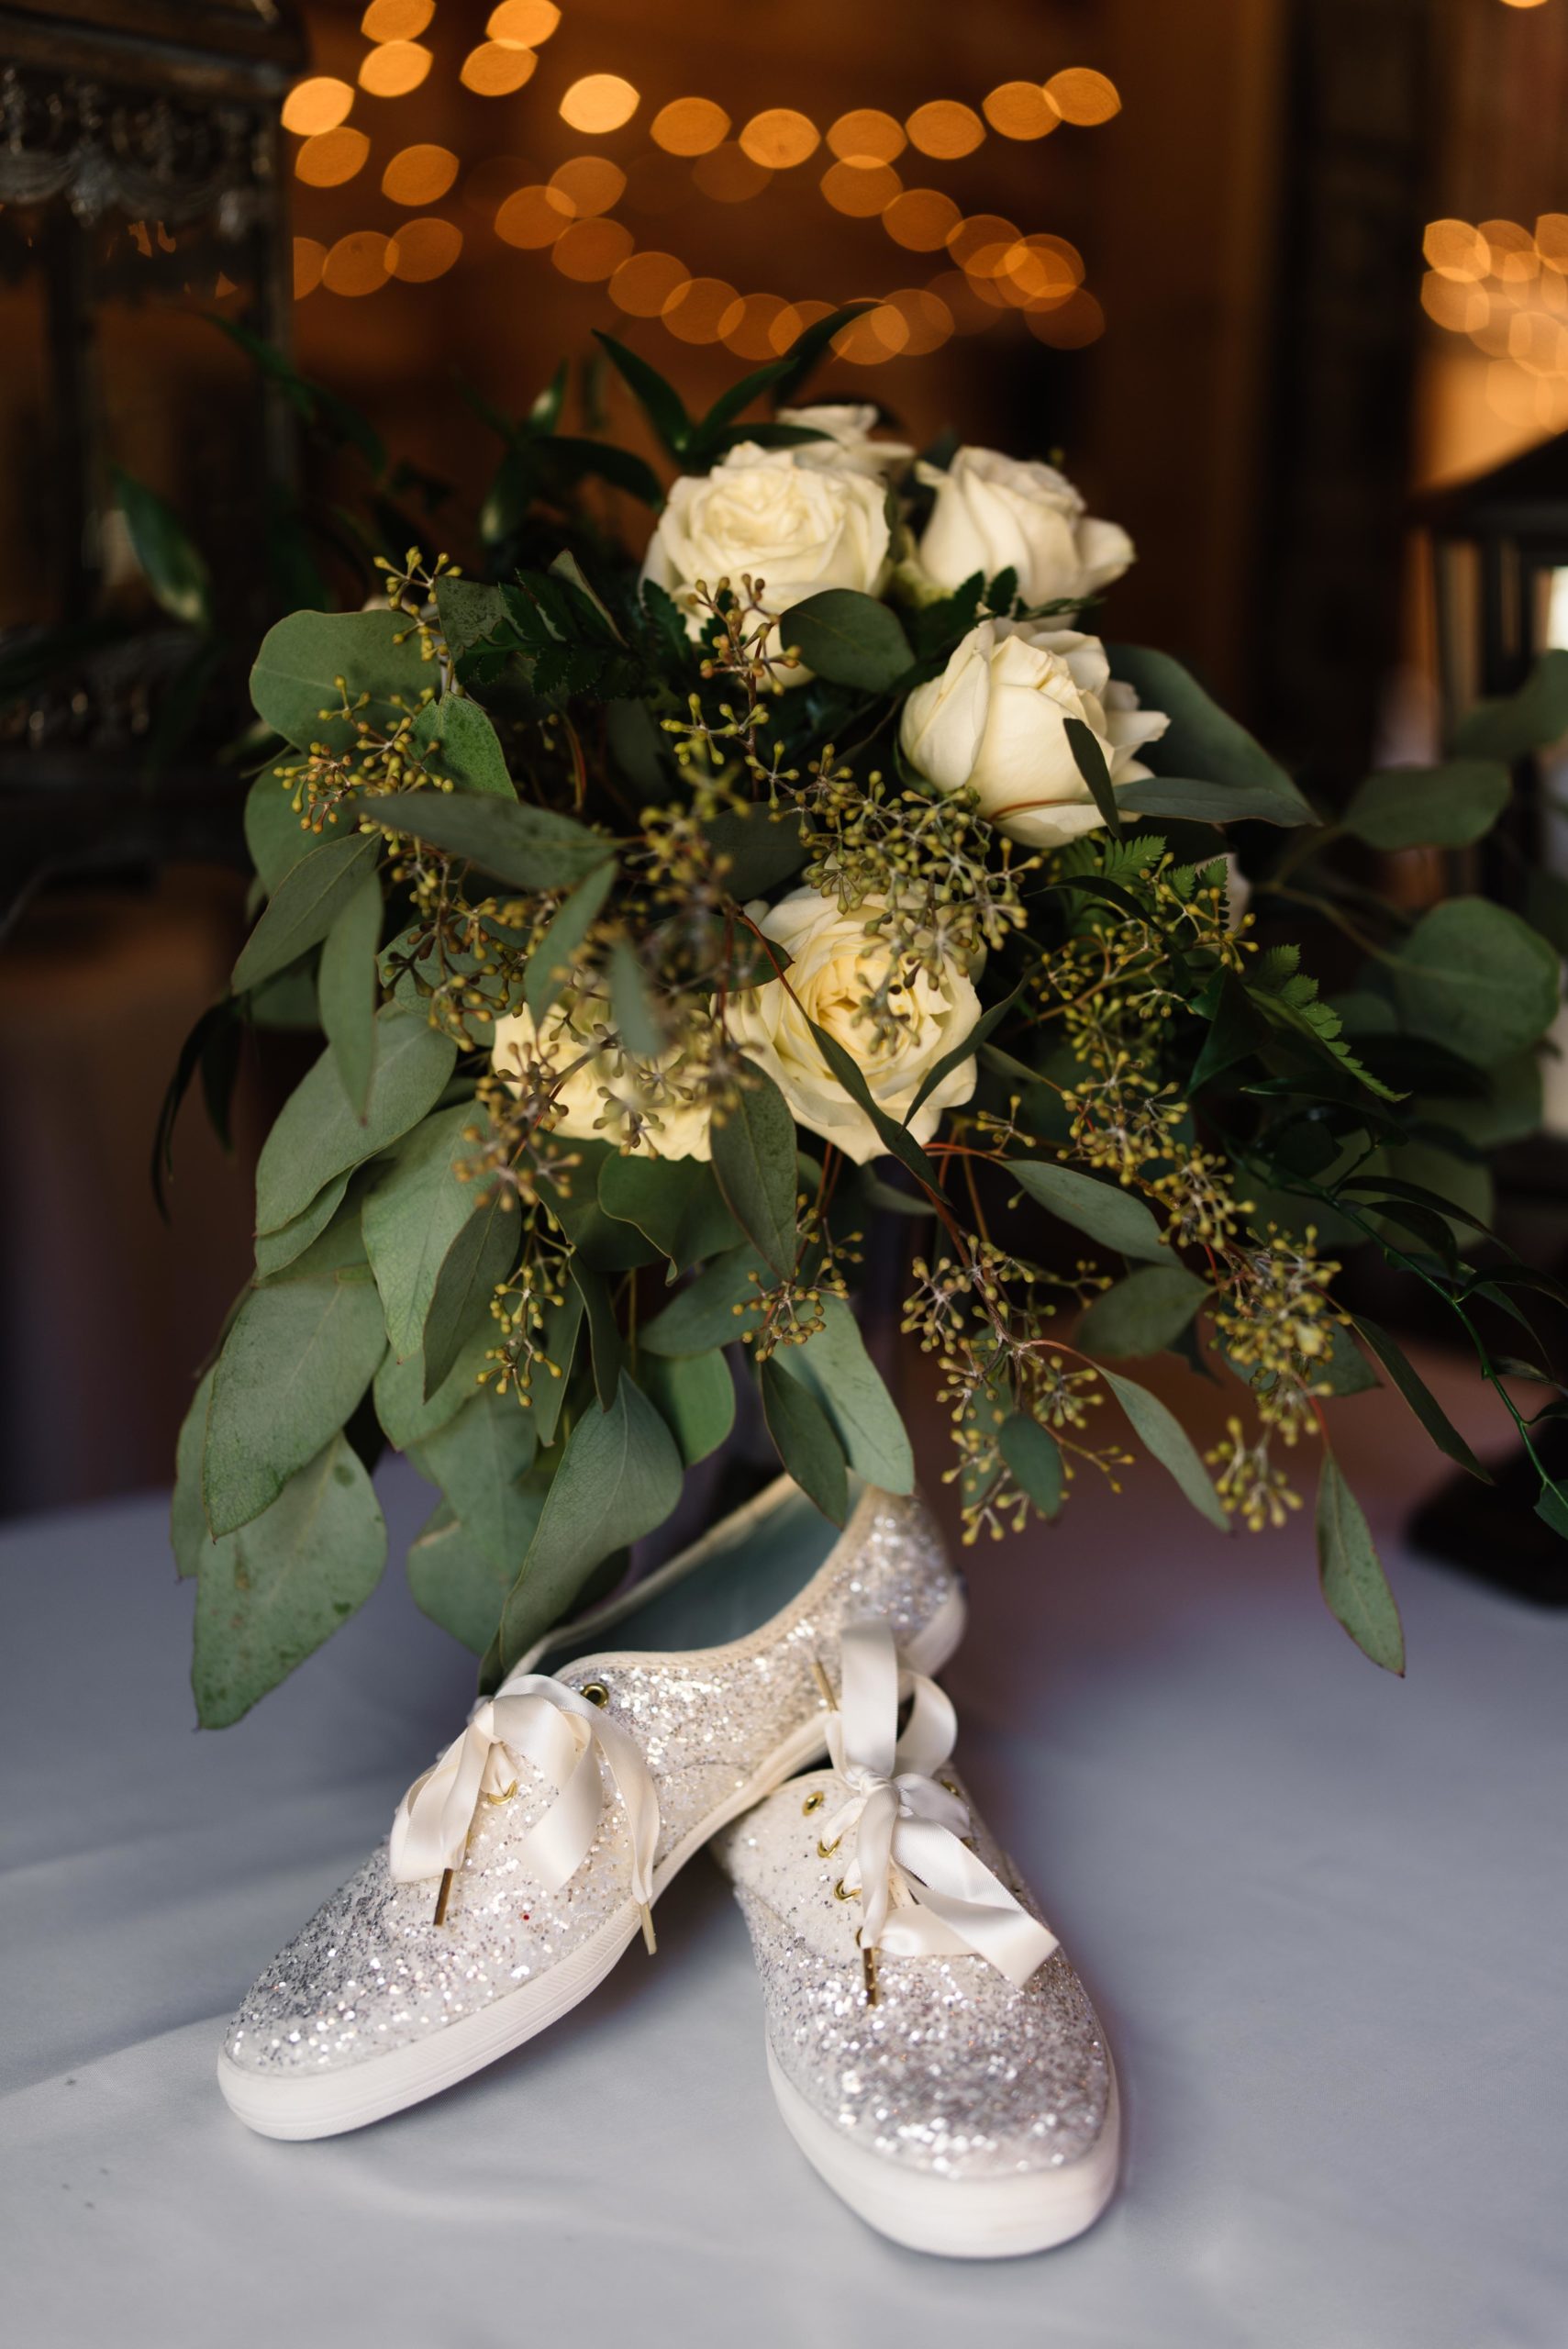 white sparkle Kate Spade Keds wedding shoes with white rose wedding bouquet schafer century farm